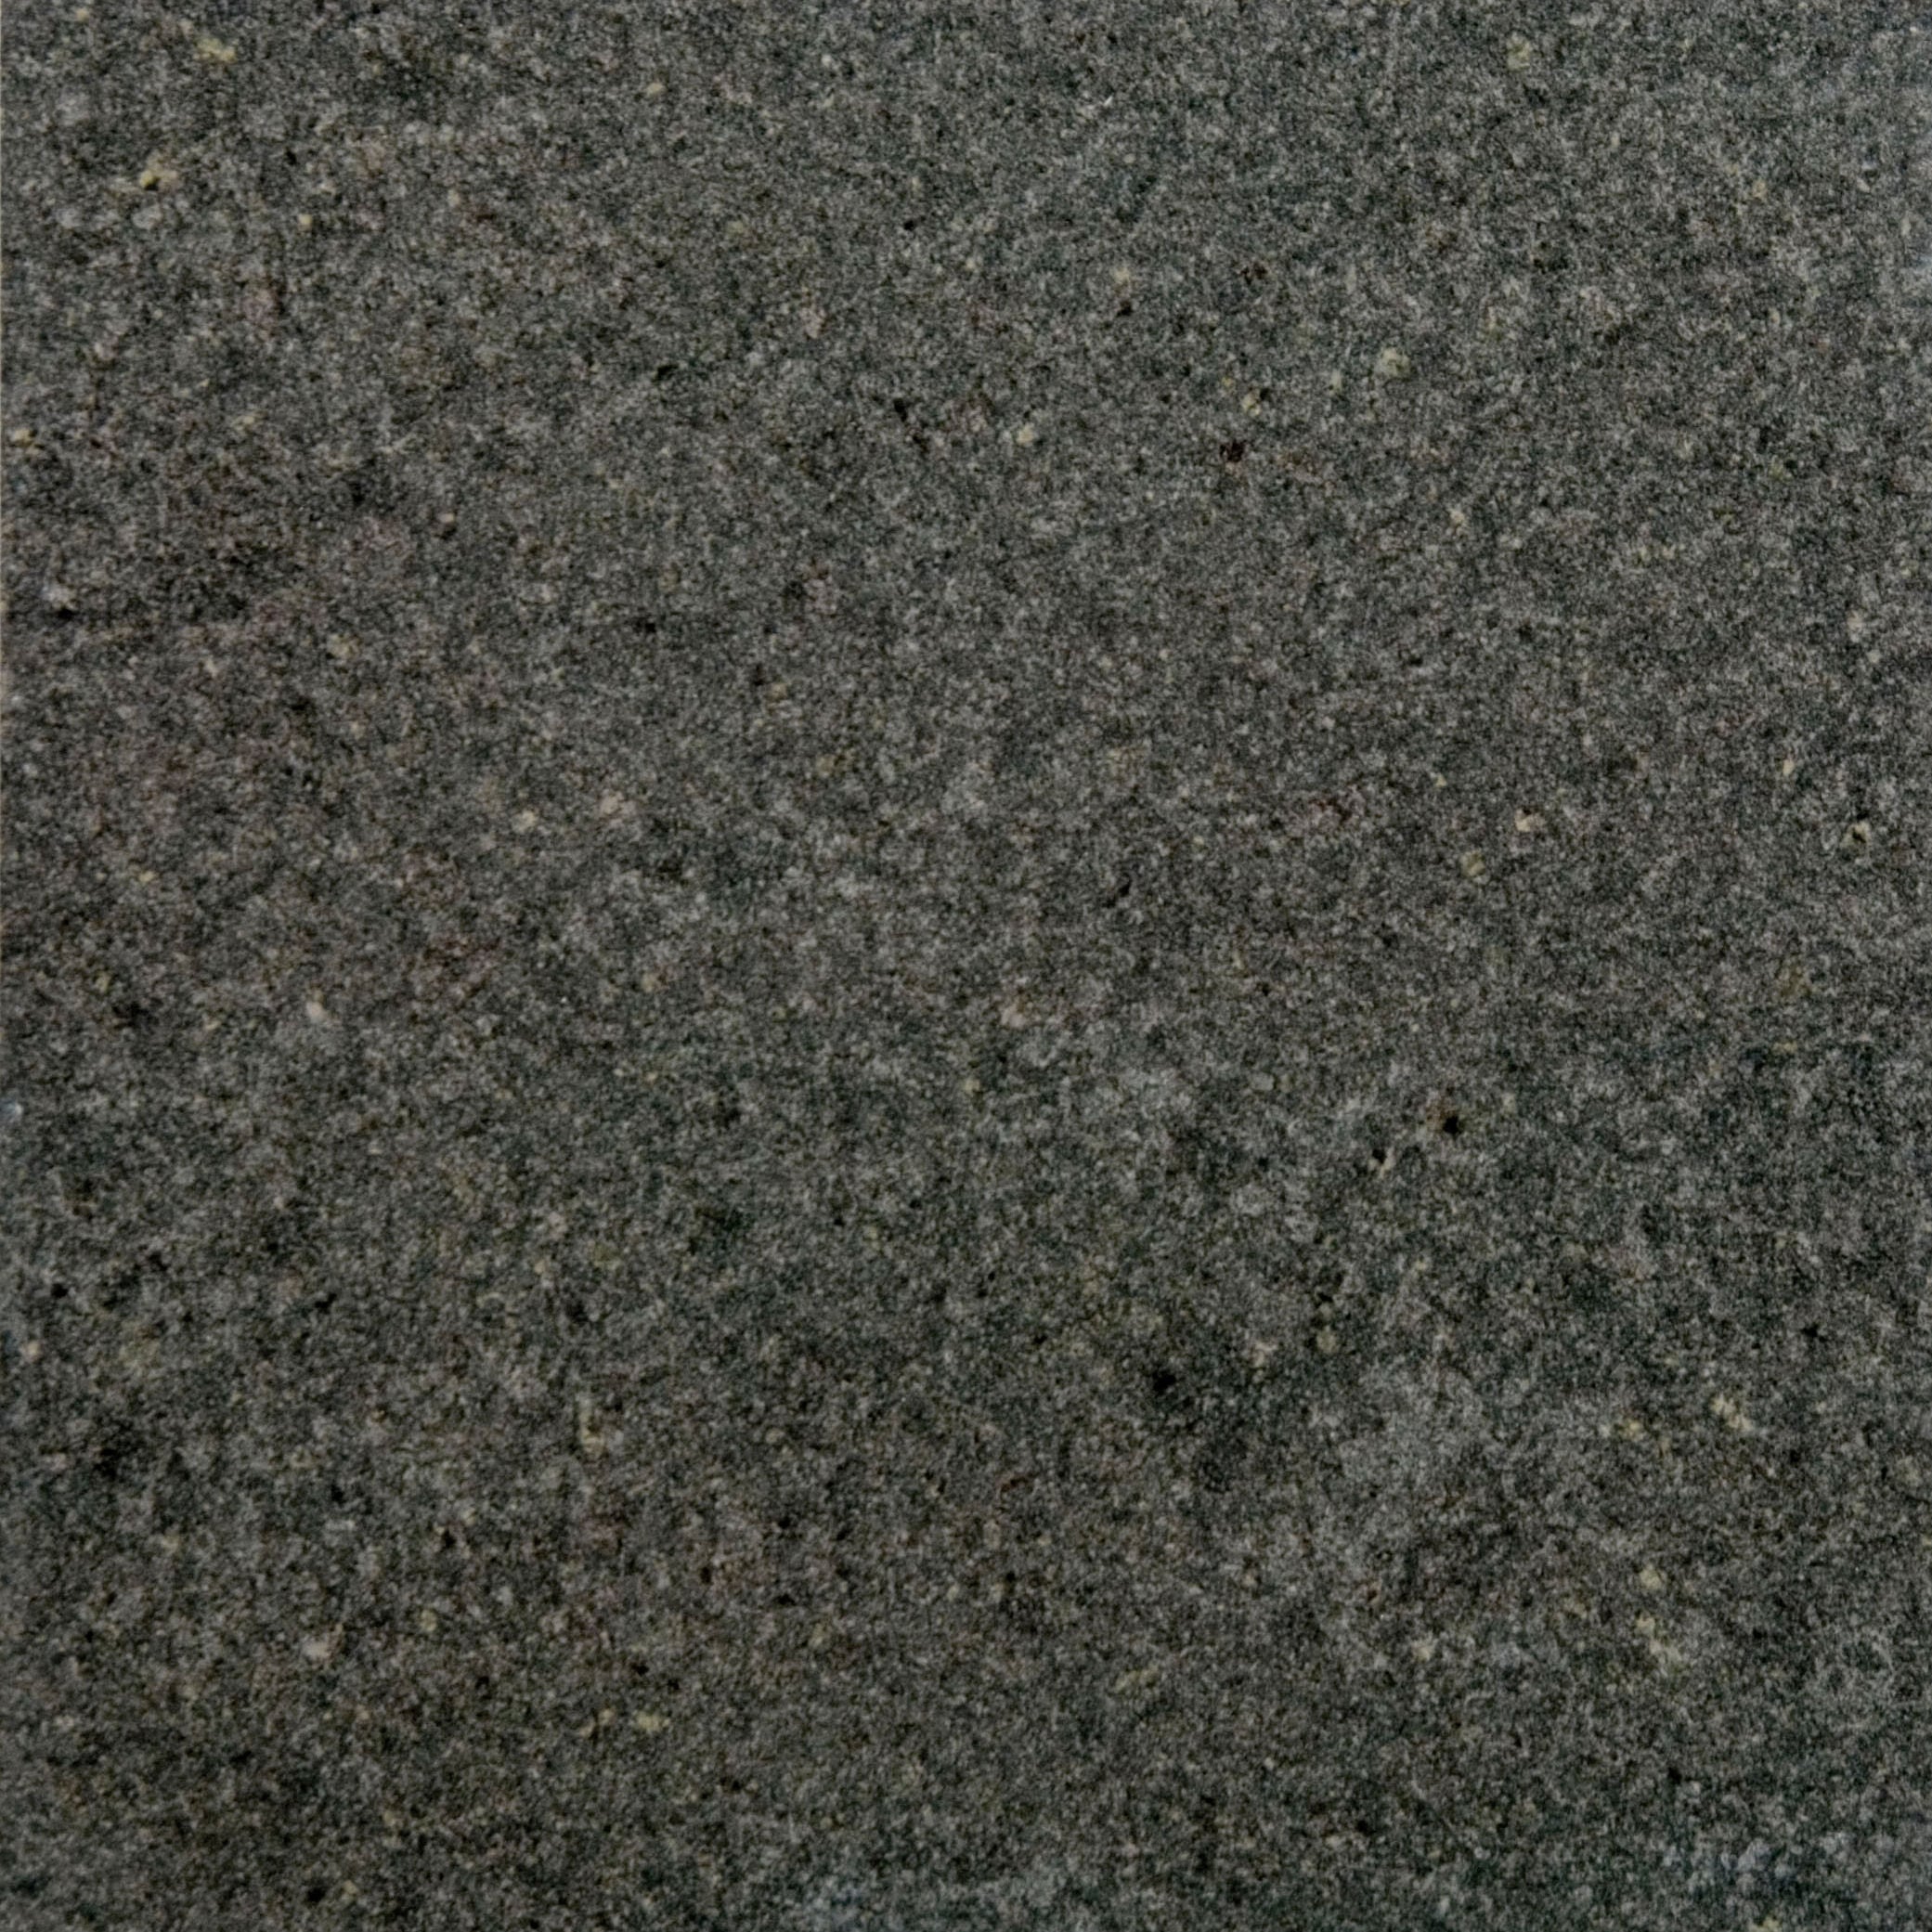 Varna Flamed Outdoor Granite Mandarin, Flamed Granite Floor Tiles